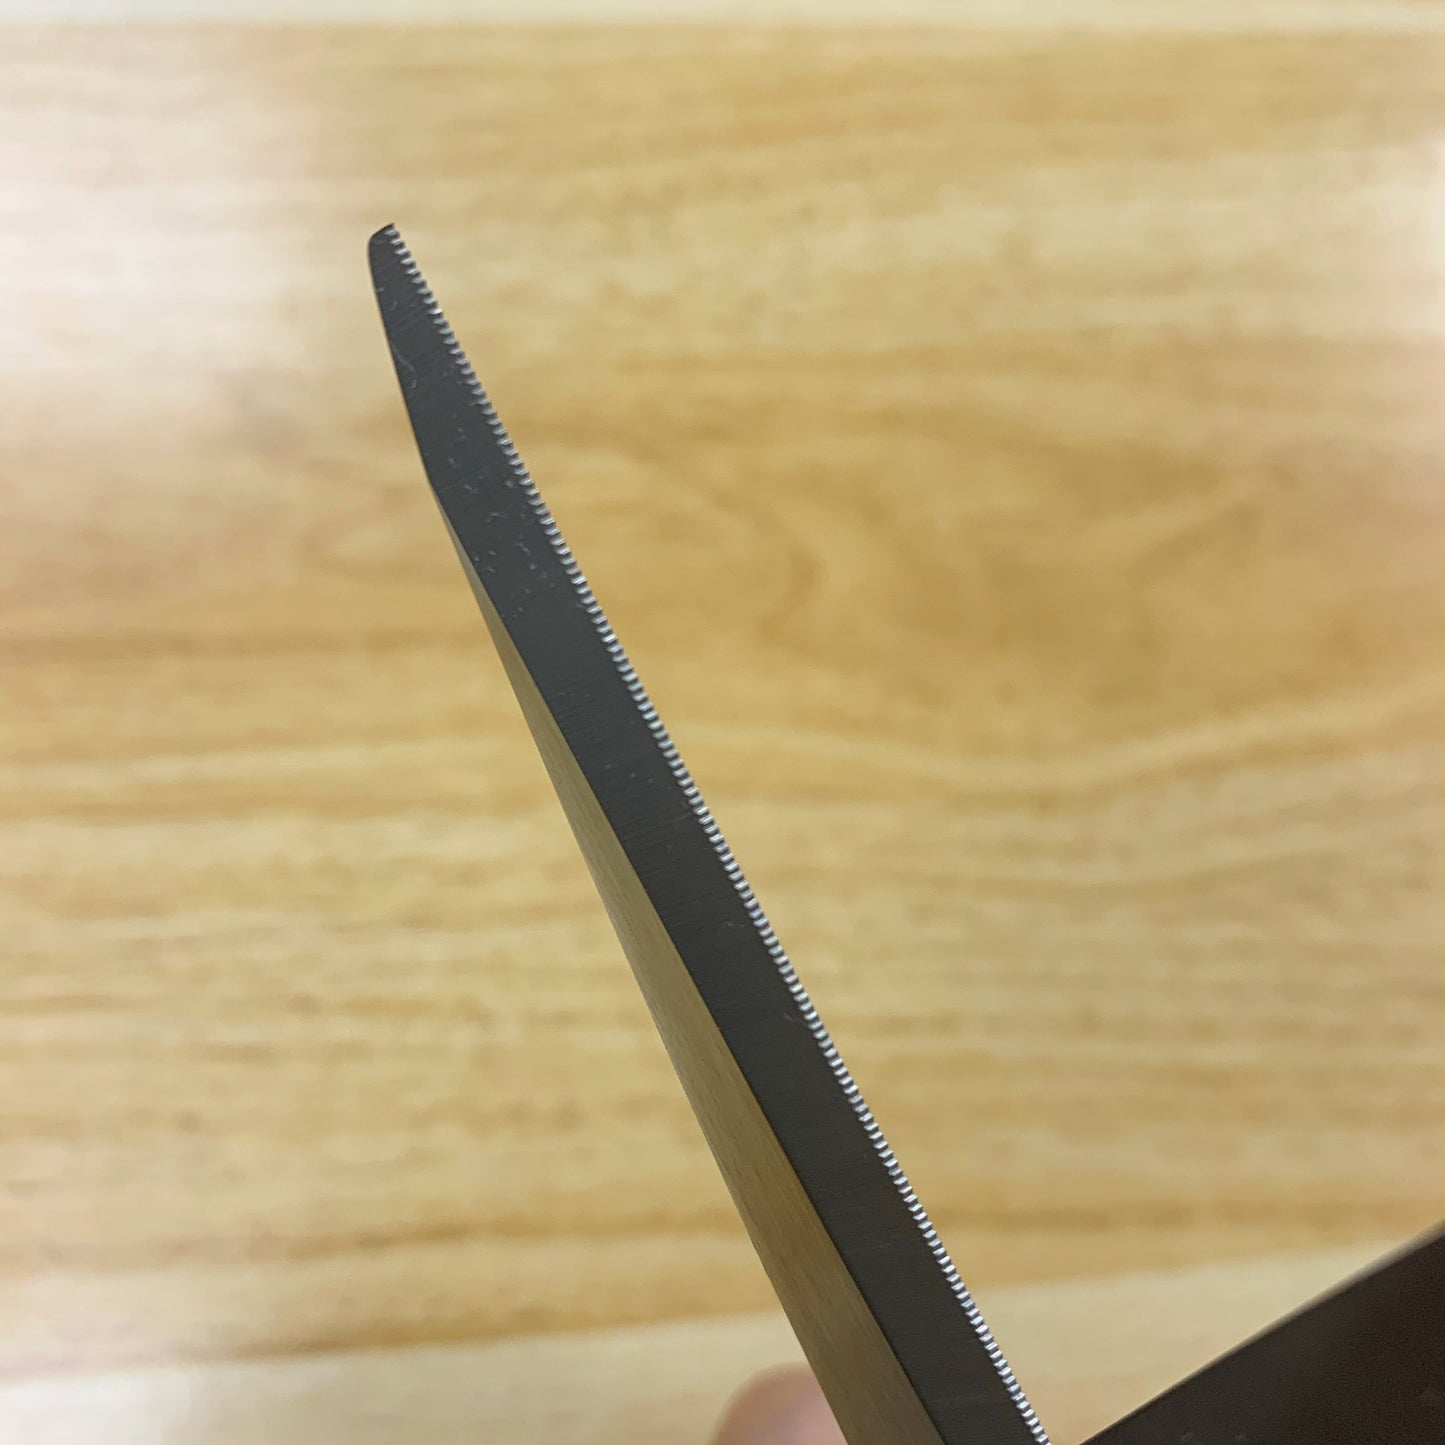 Clover non-slip stainless scissors 防滑不鏽鋼剪刀